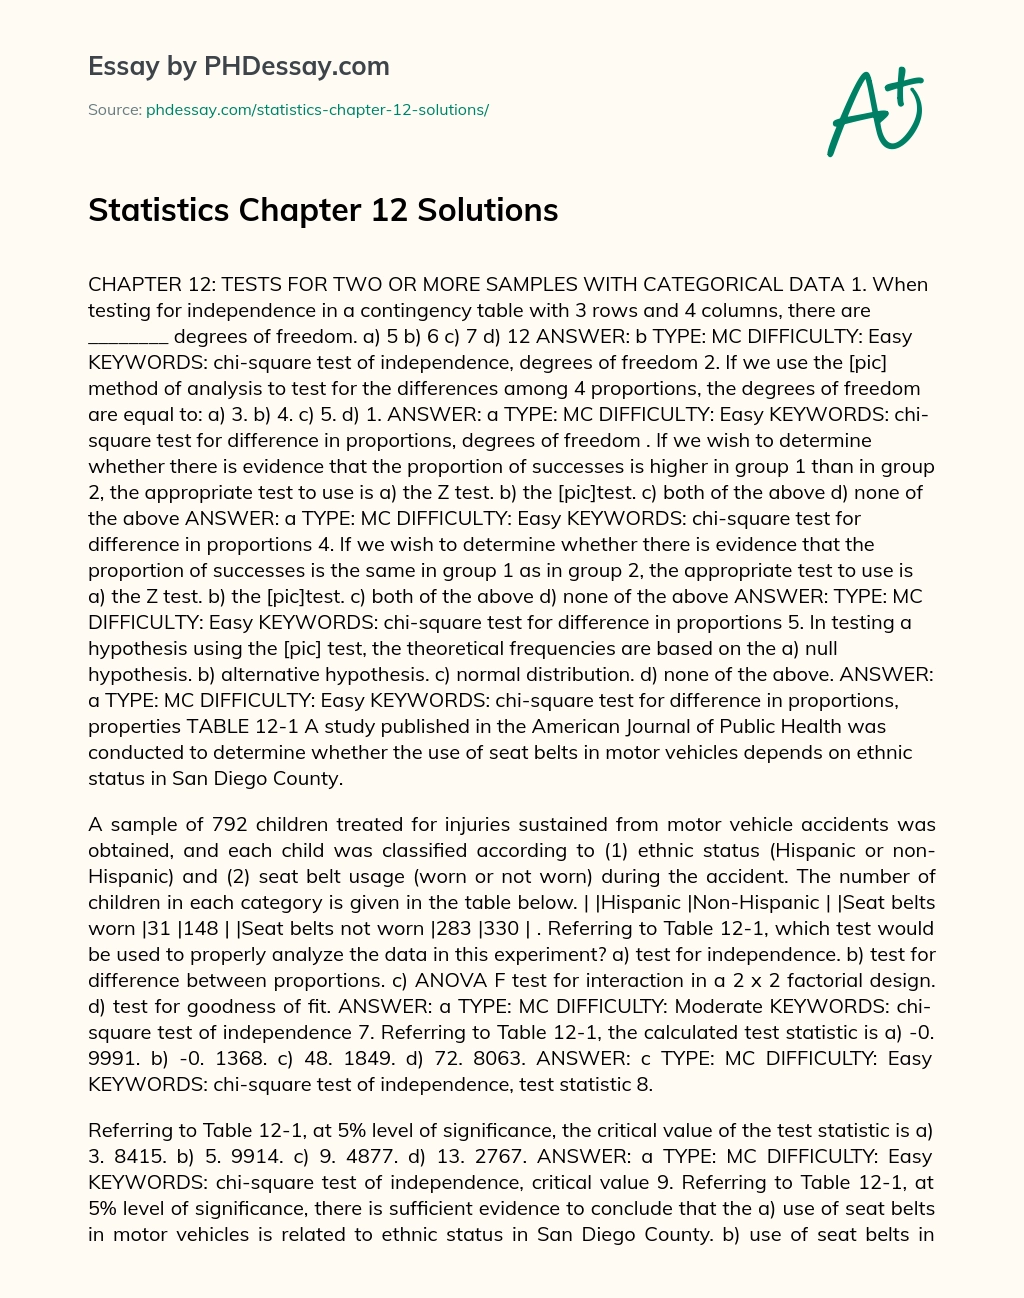 Statistics Chapter 12 Solutions essay